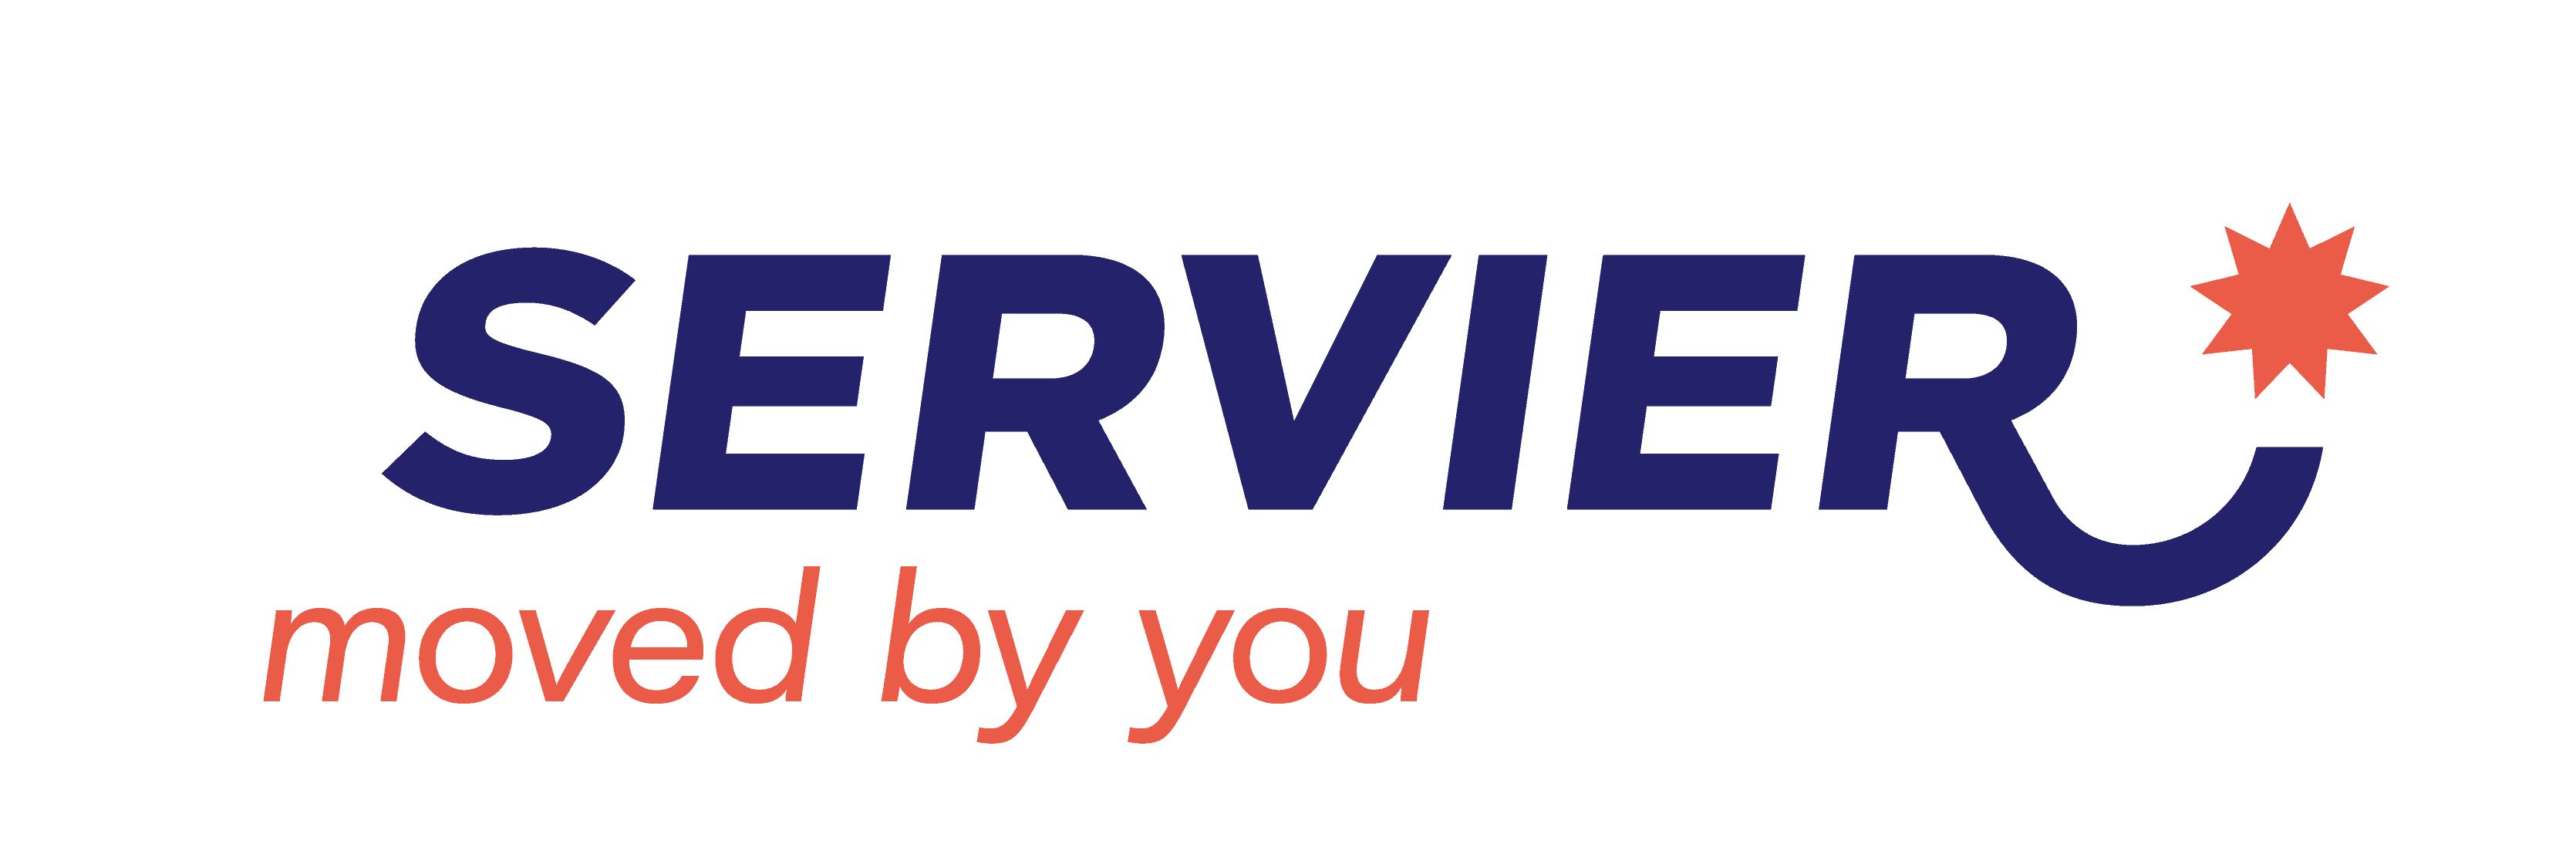 Servier Logo Sign RVB